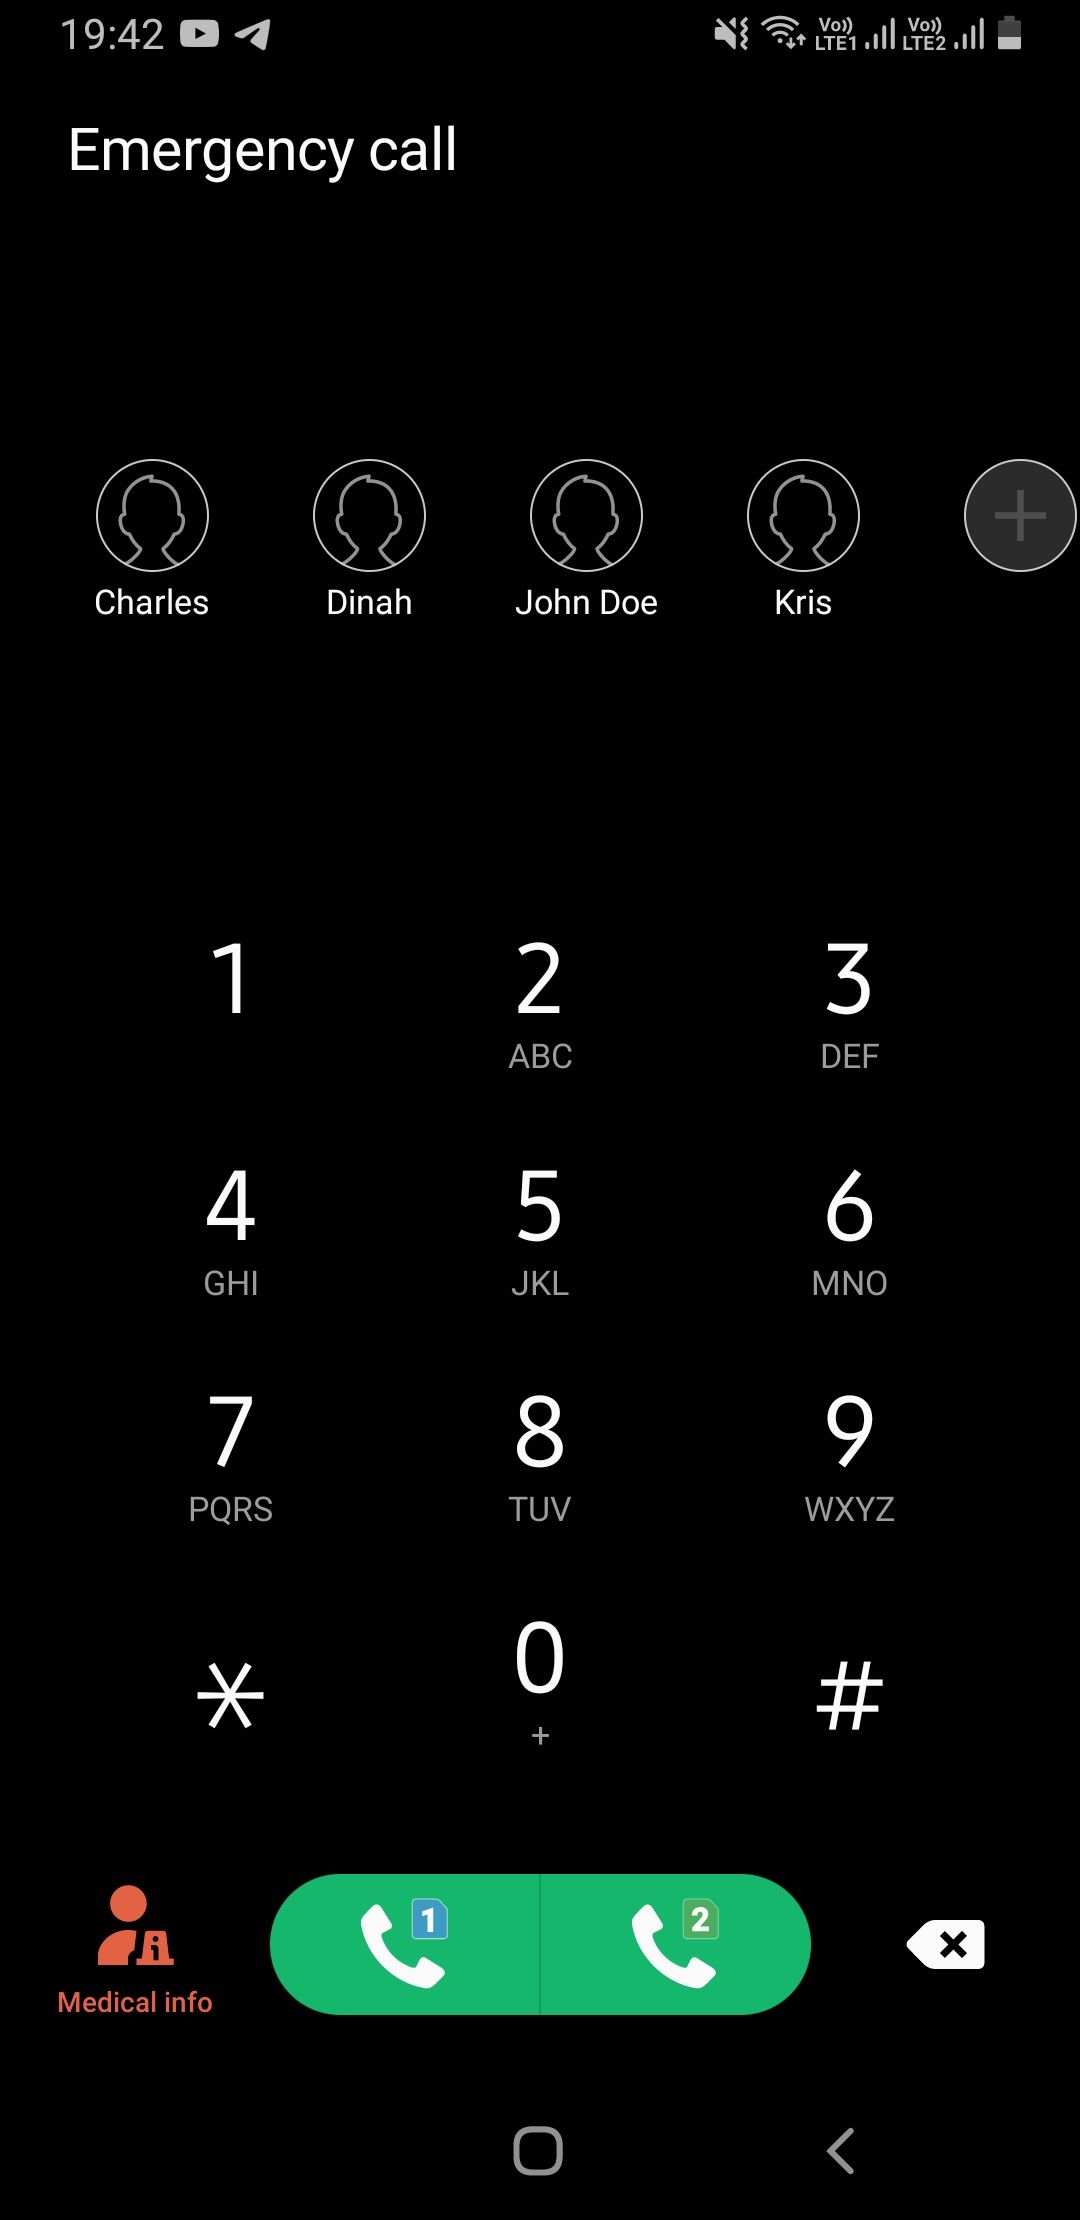 Emergency call screen on Samsung